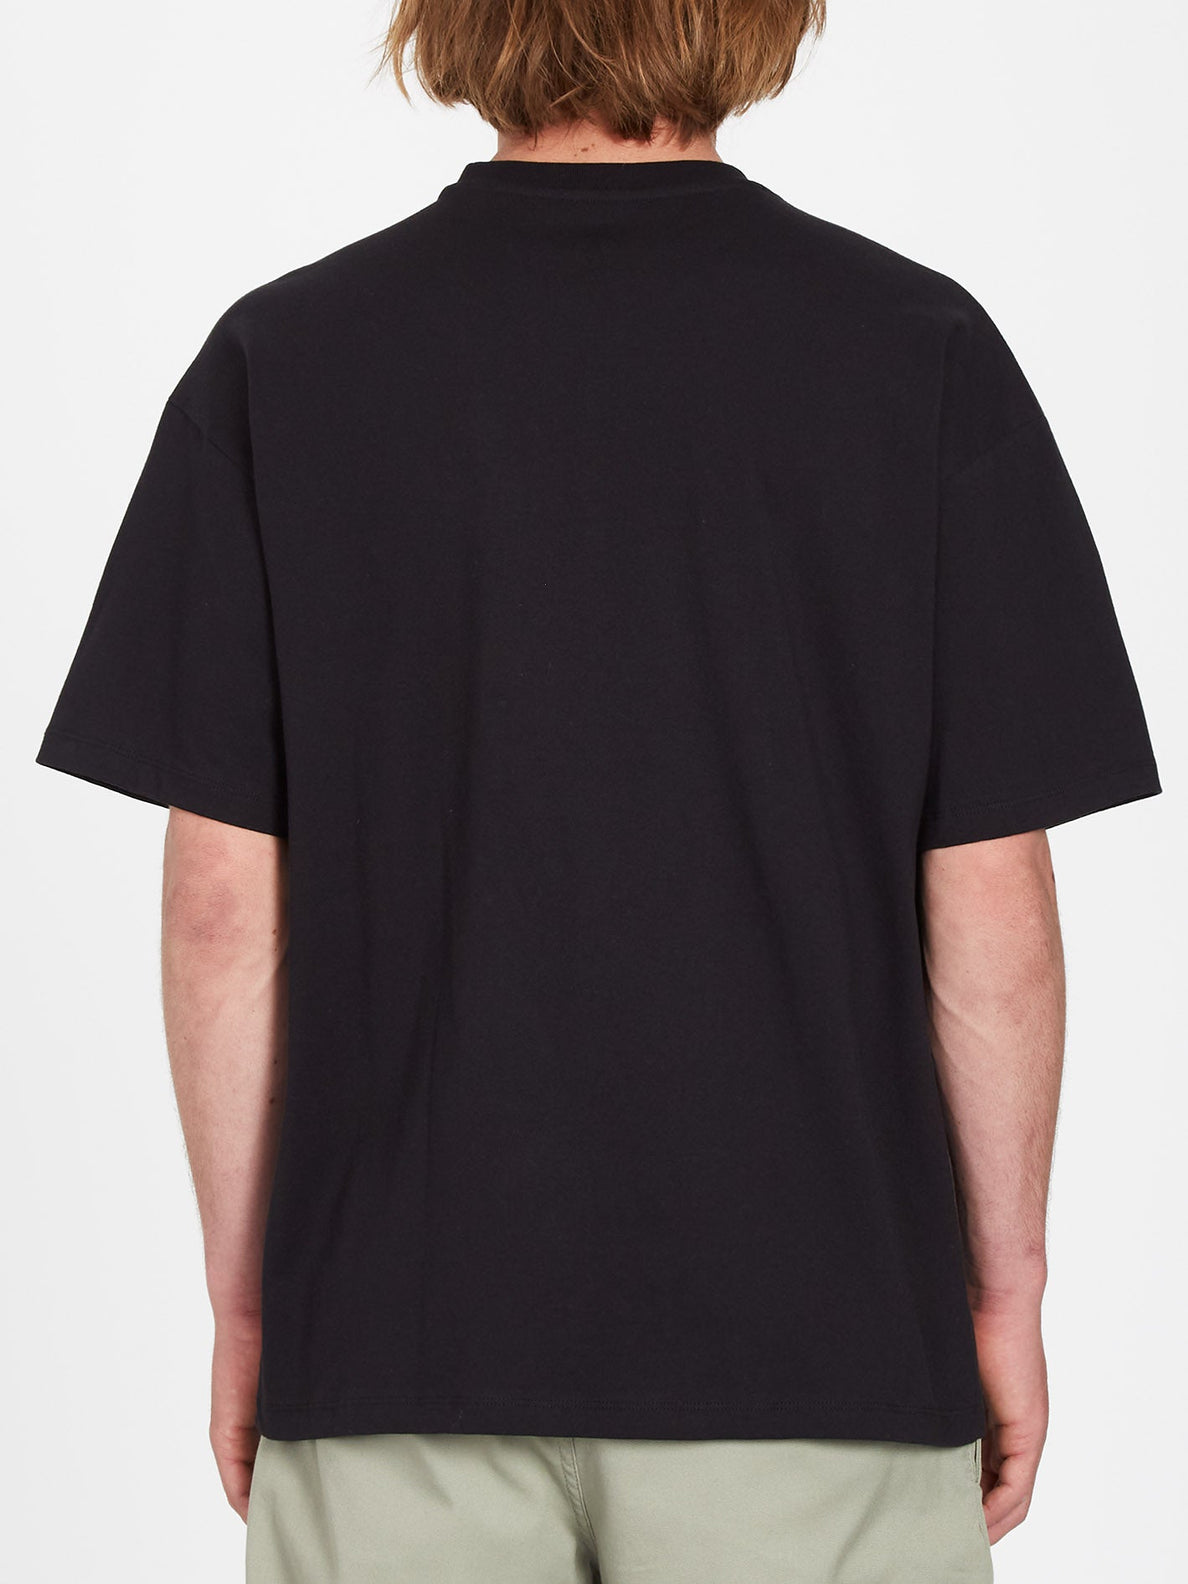 Camiseta Volcom Crossworld - Black